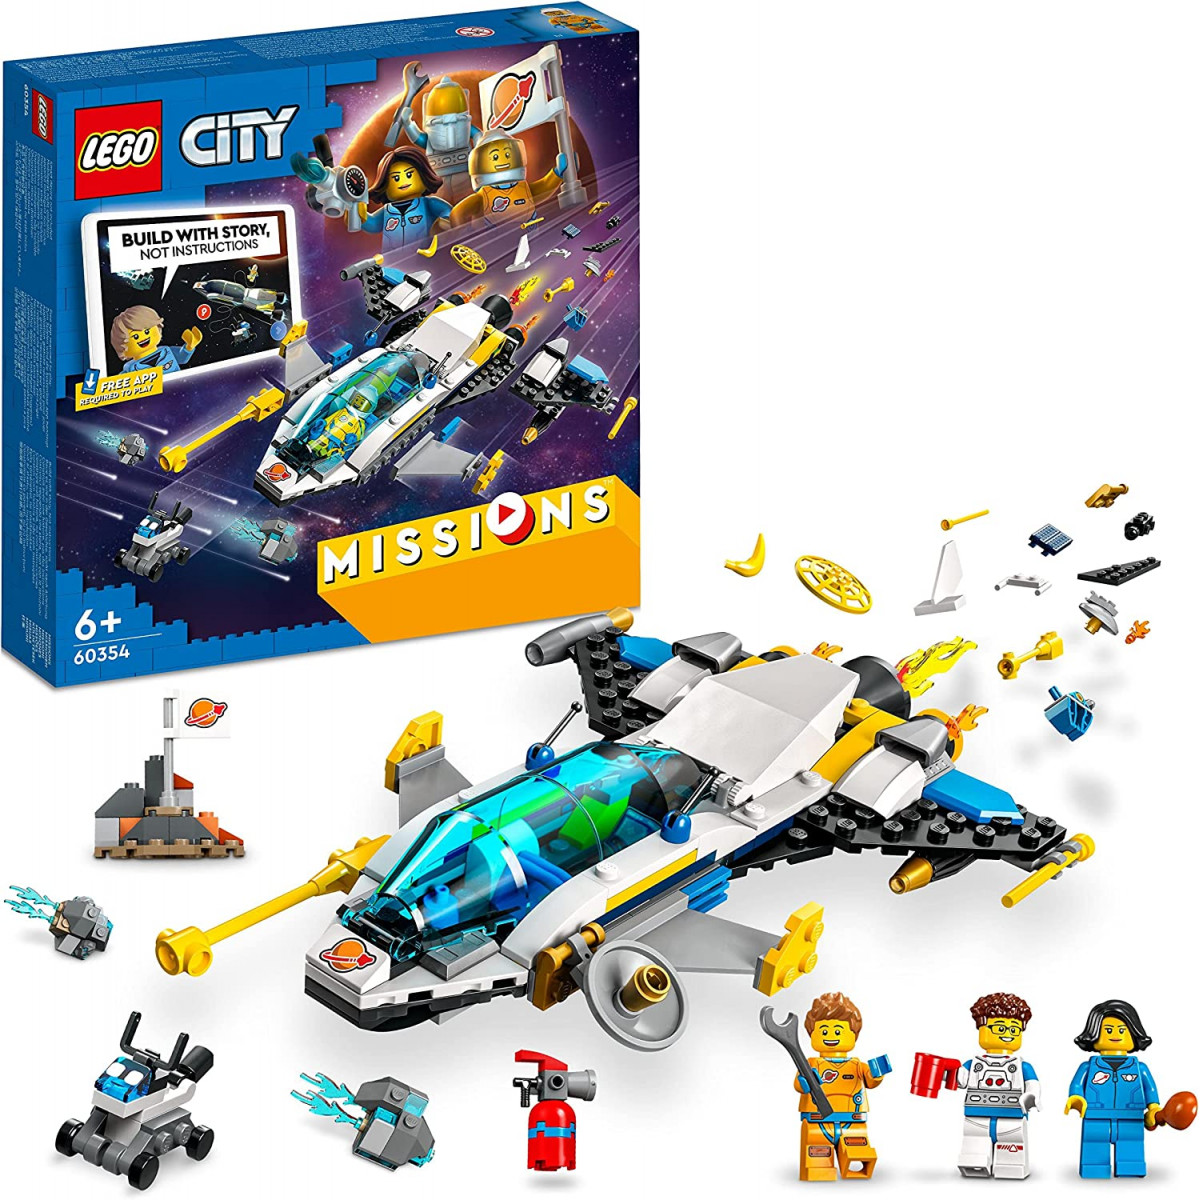 LEGO City 60354 - Mars Spacecraft Exploration Missions